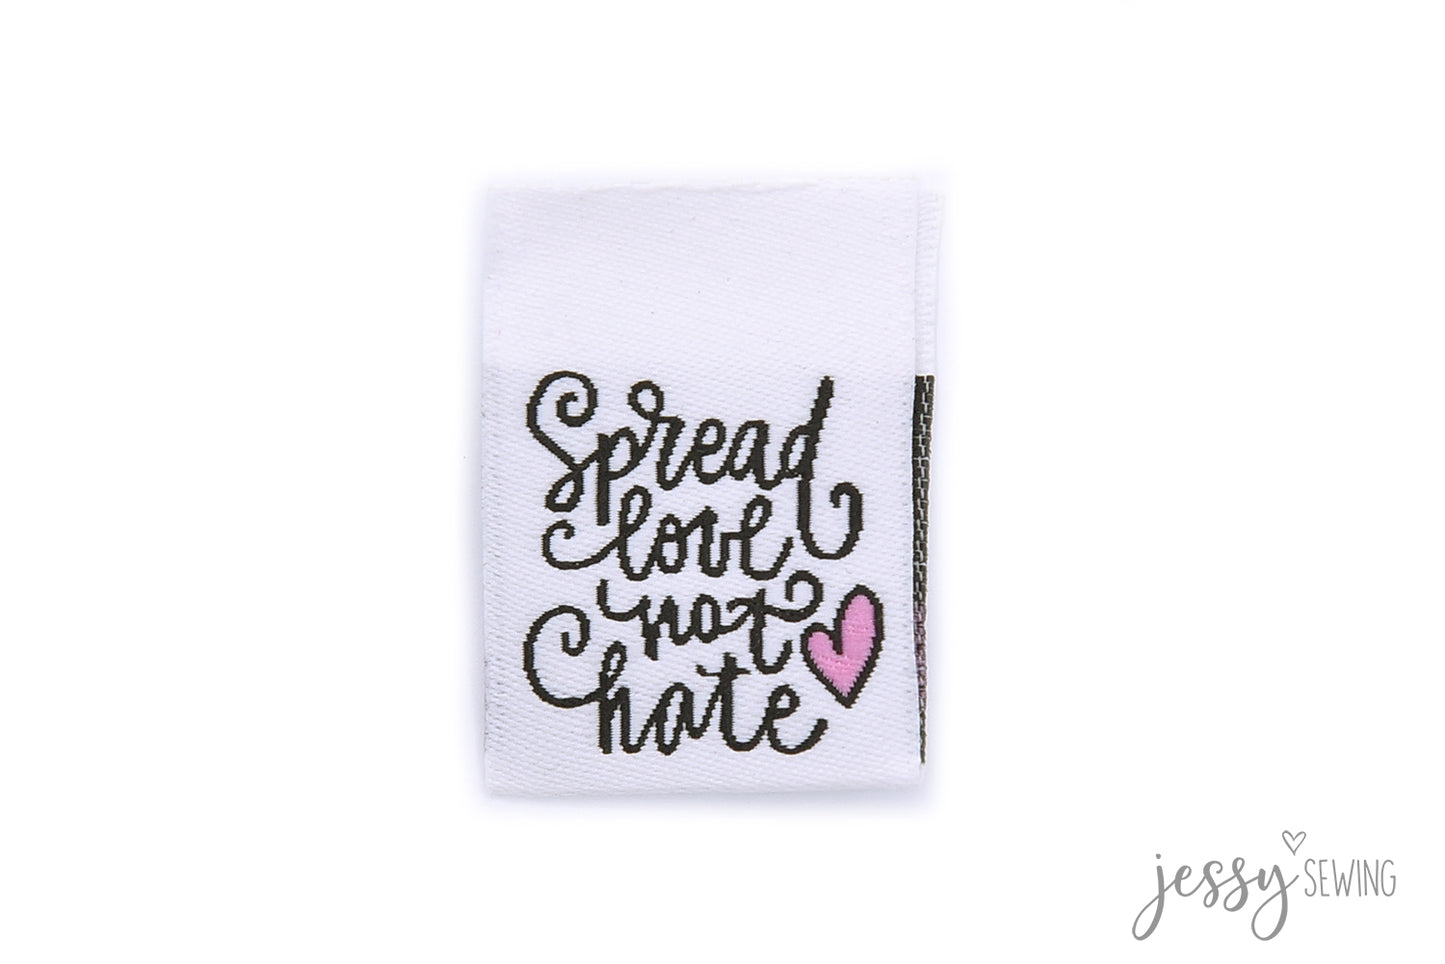 Label Weblabel "spread love not hate"